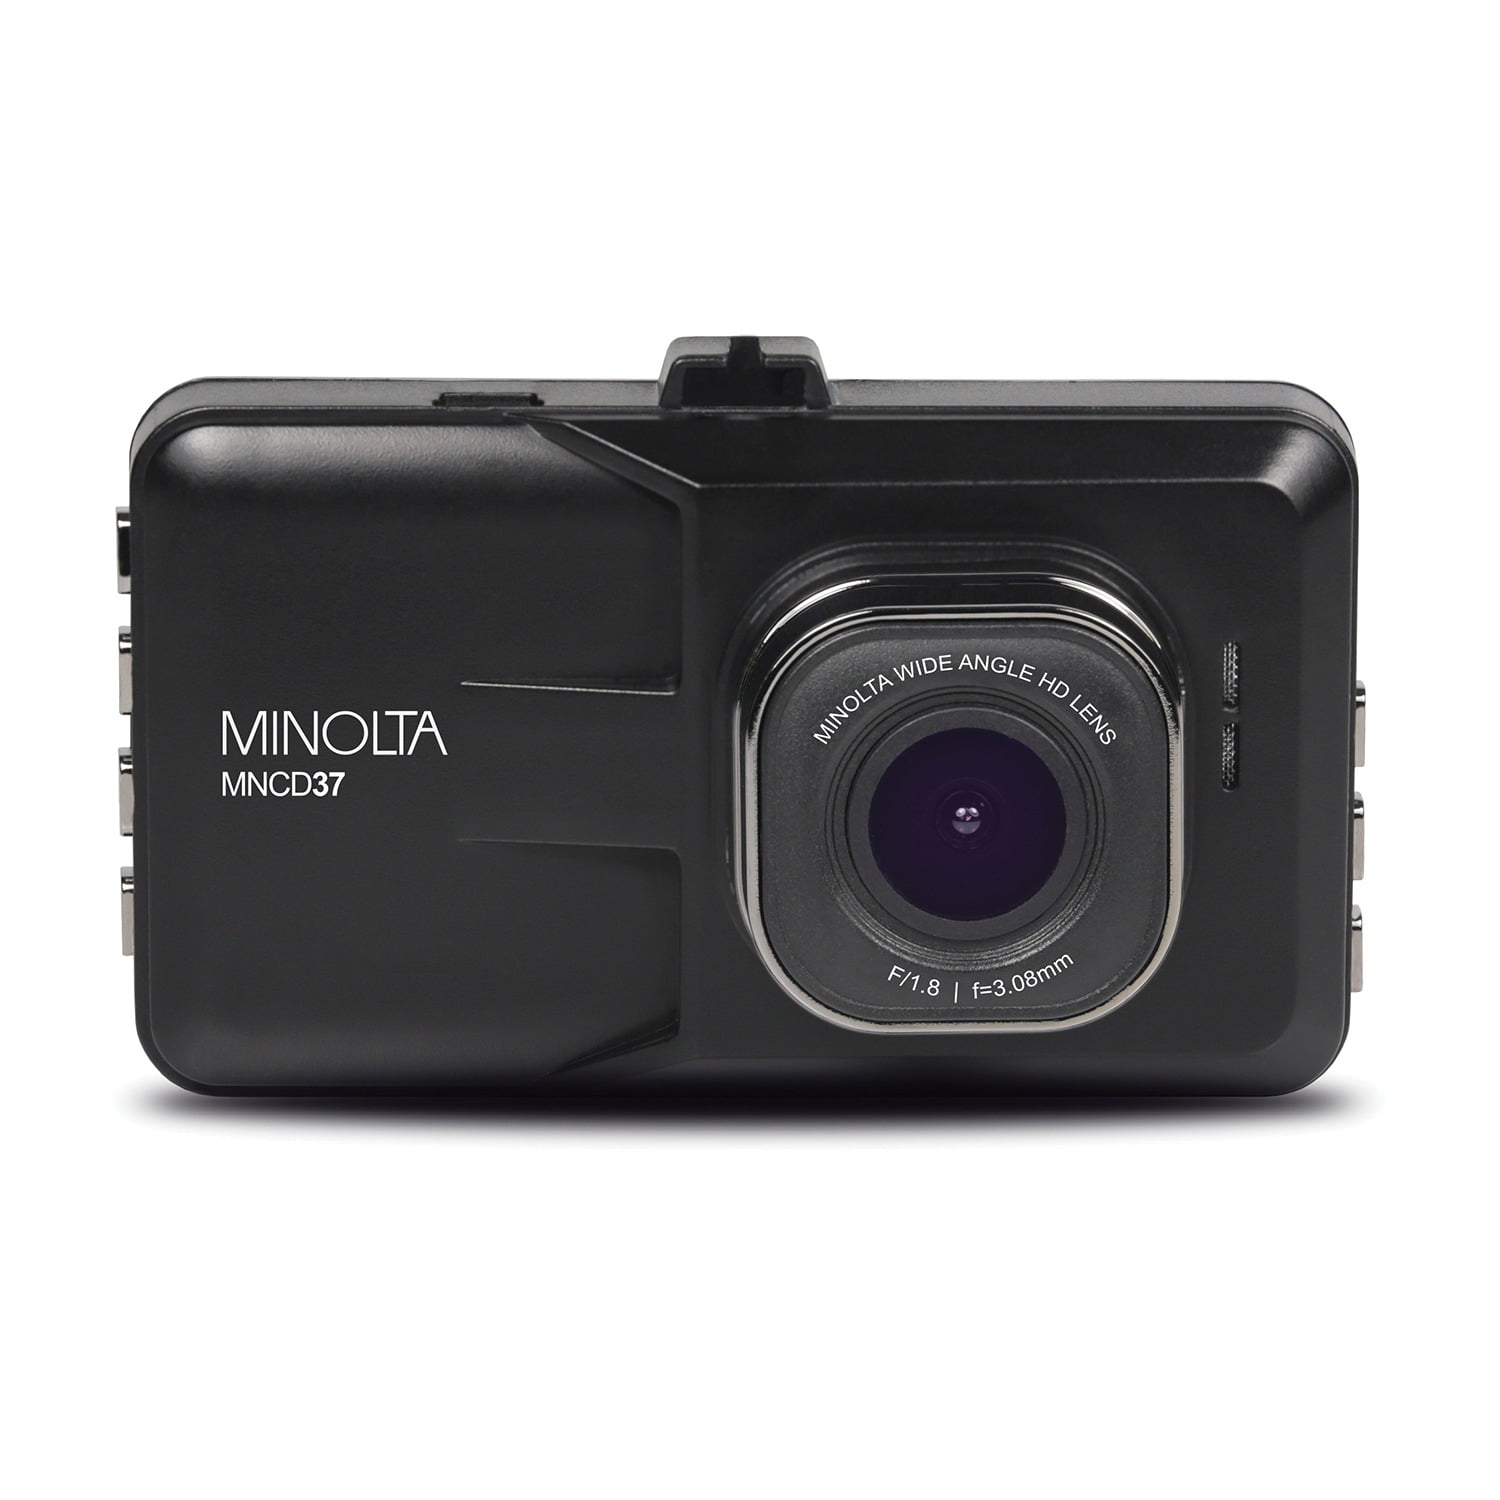 Minolta MNCD350X 2-Channel 1080p Dash Cam w/ Interior Camera ,Black